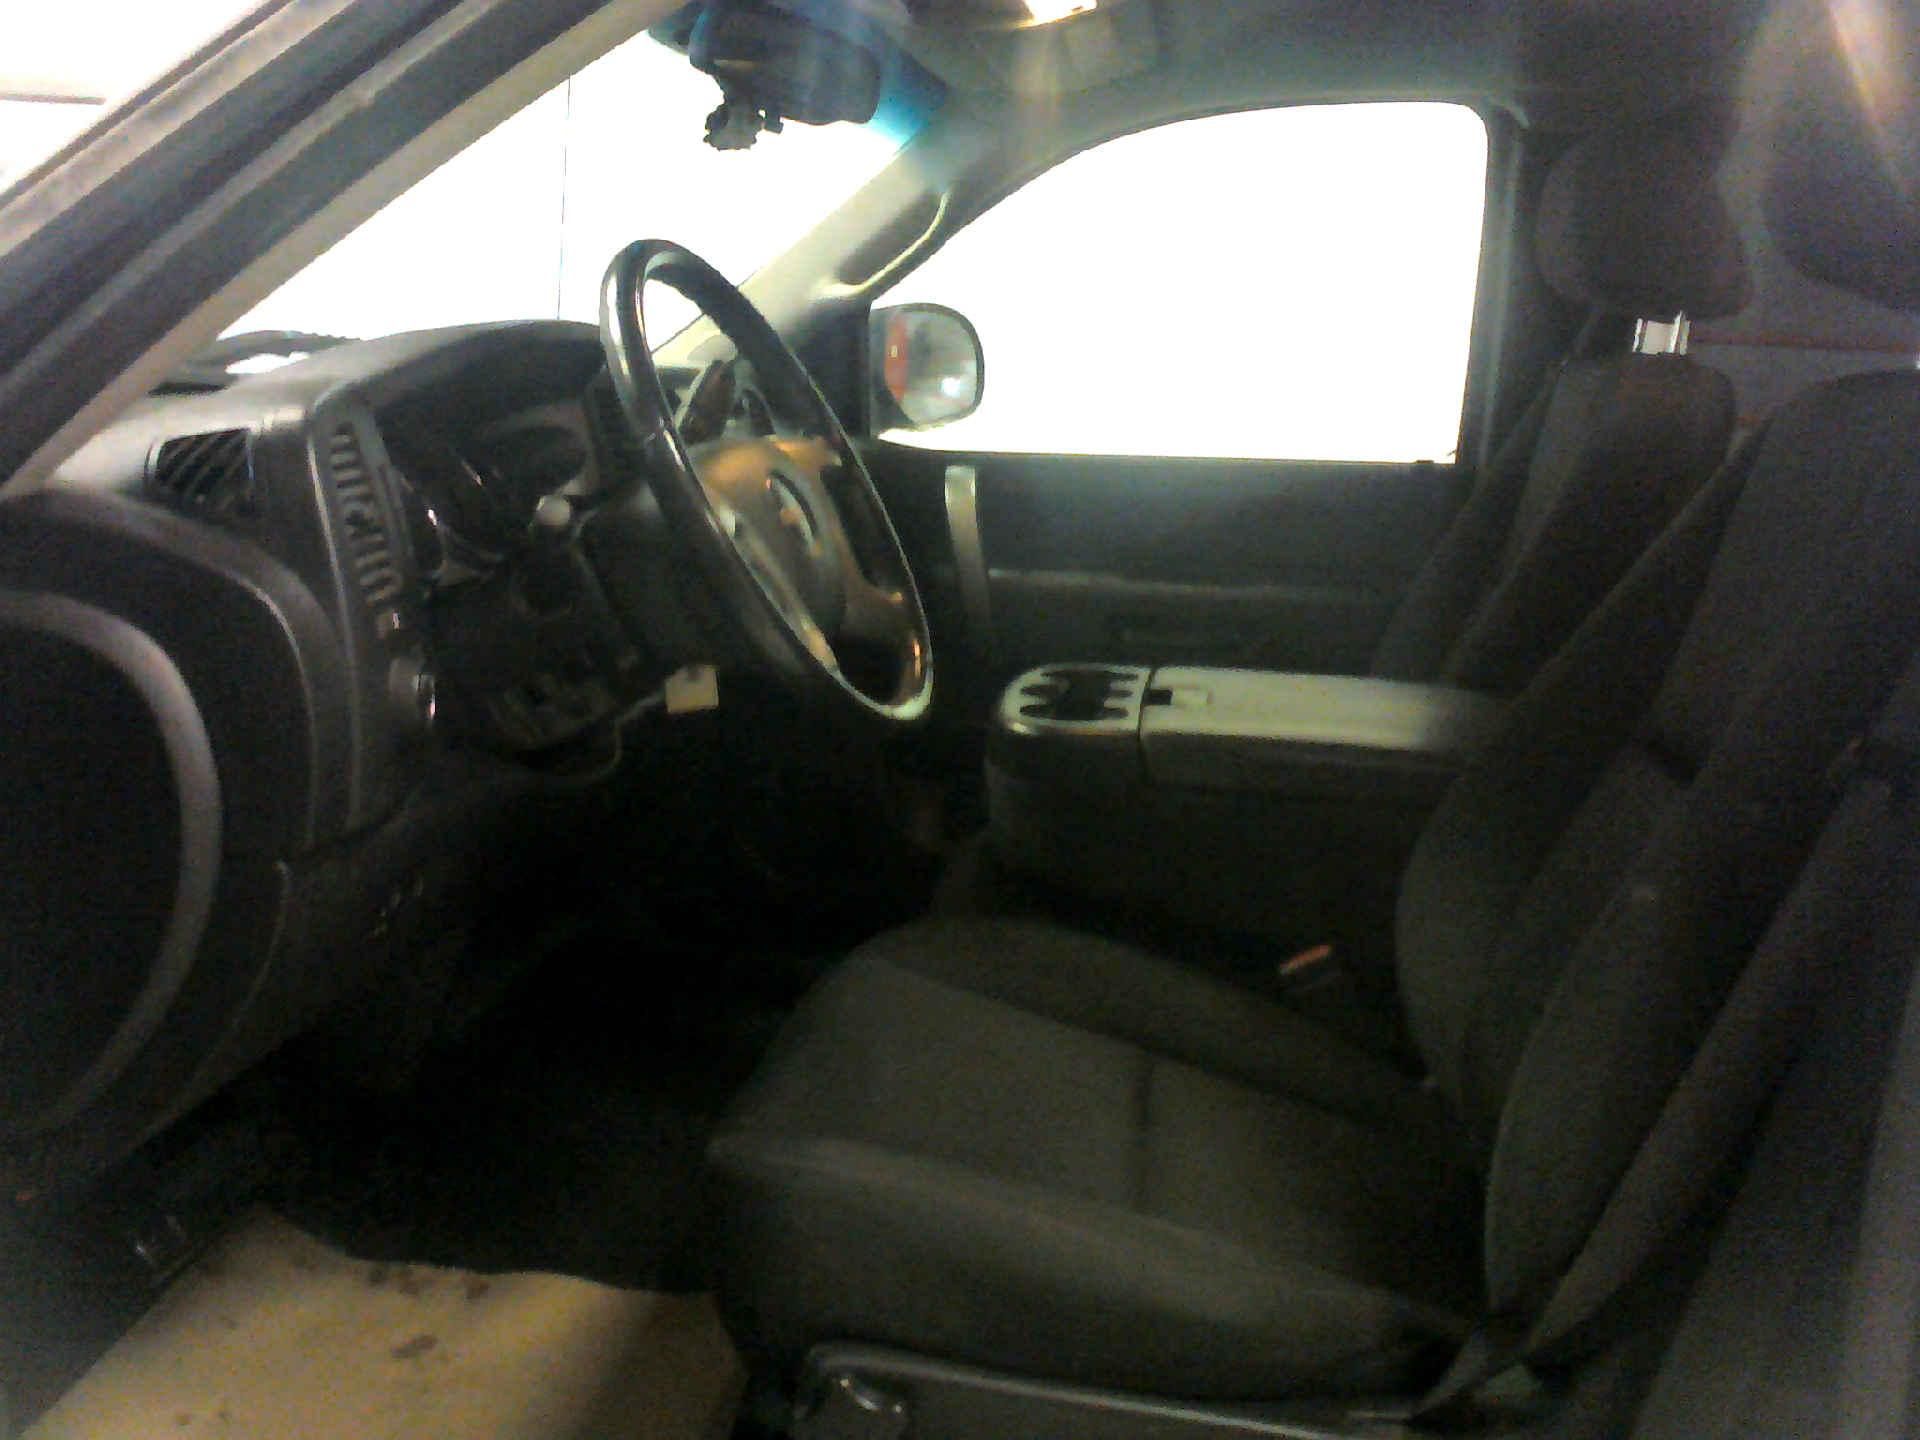 2012 GMC SIERRA 2500HD SLE QUAD CAB 4WD 6.0L V8 OHV 16V FFV AUTOMATIC SN:1GT220CG6CZ273827 OPTIONS: - Image 5 of 9